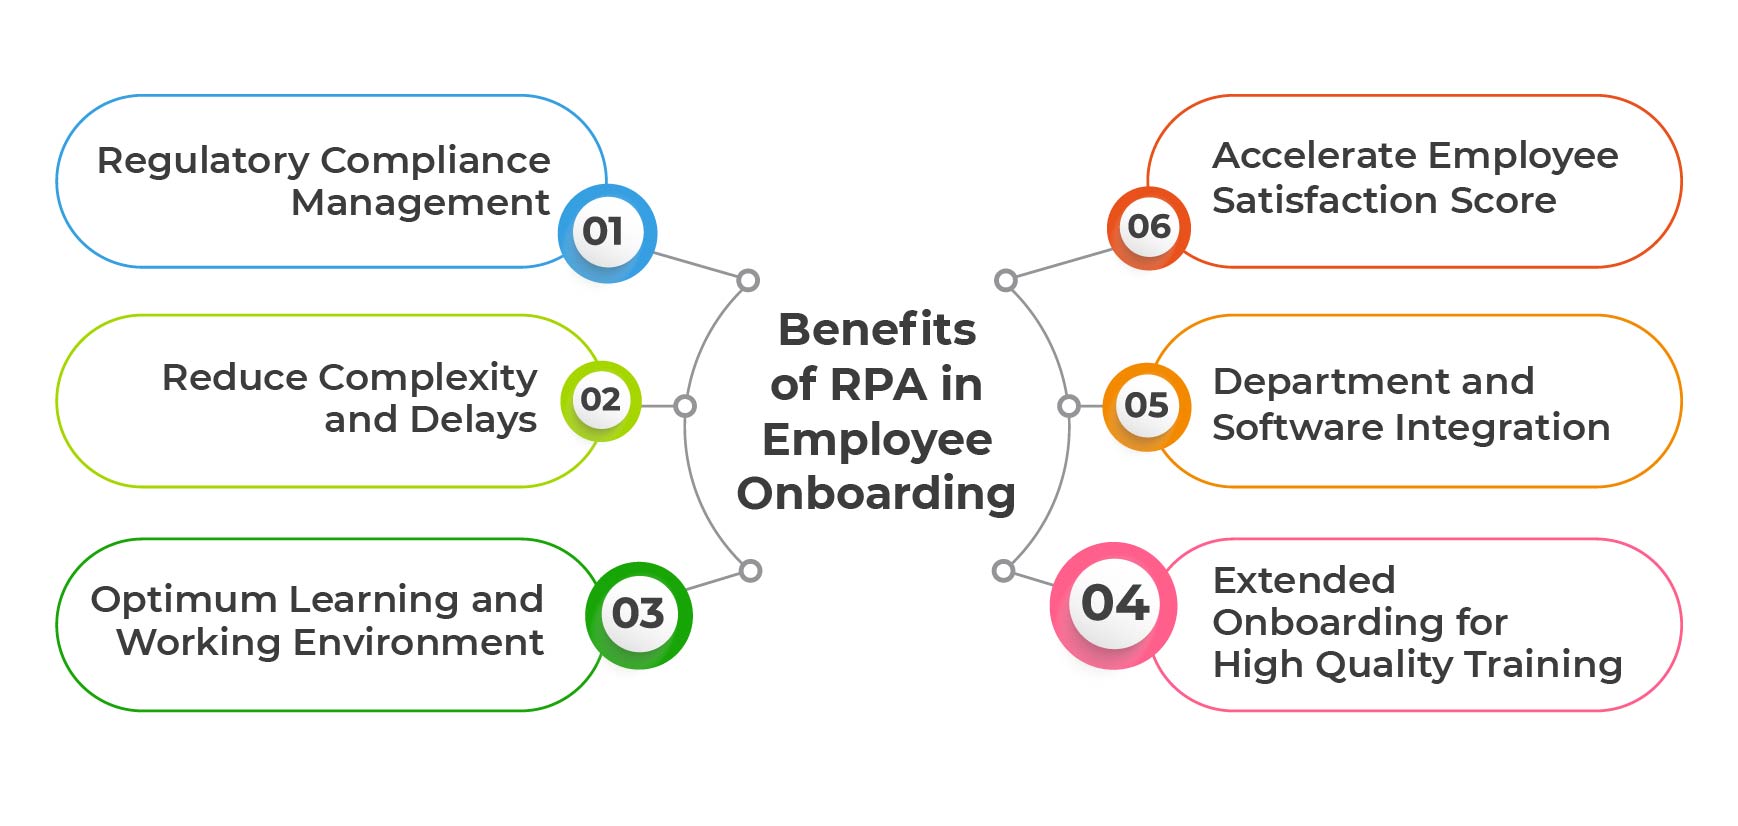 Benefits of RPA in Employee Onboarding